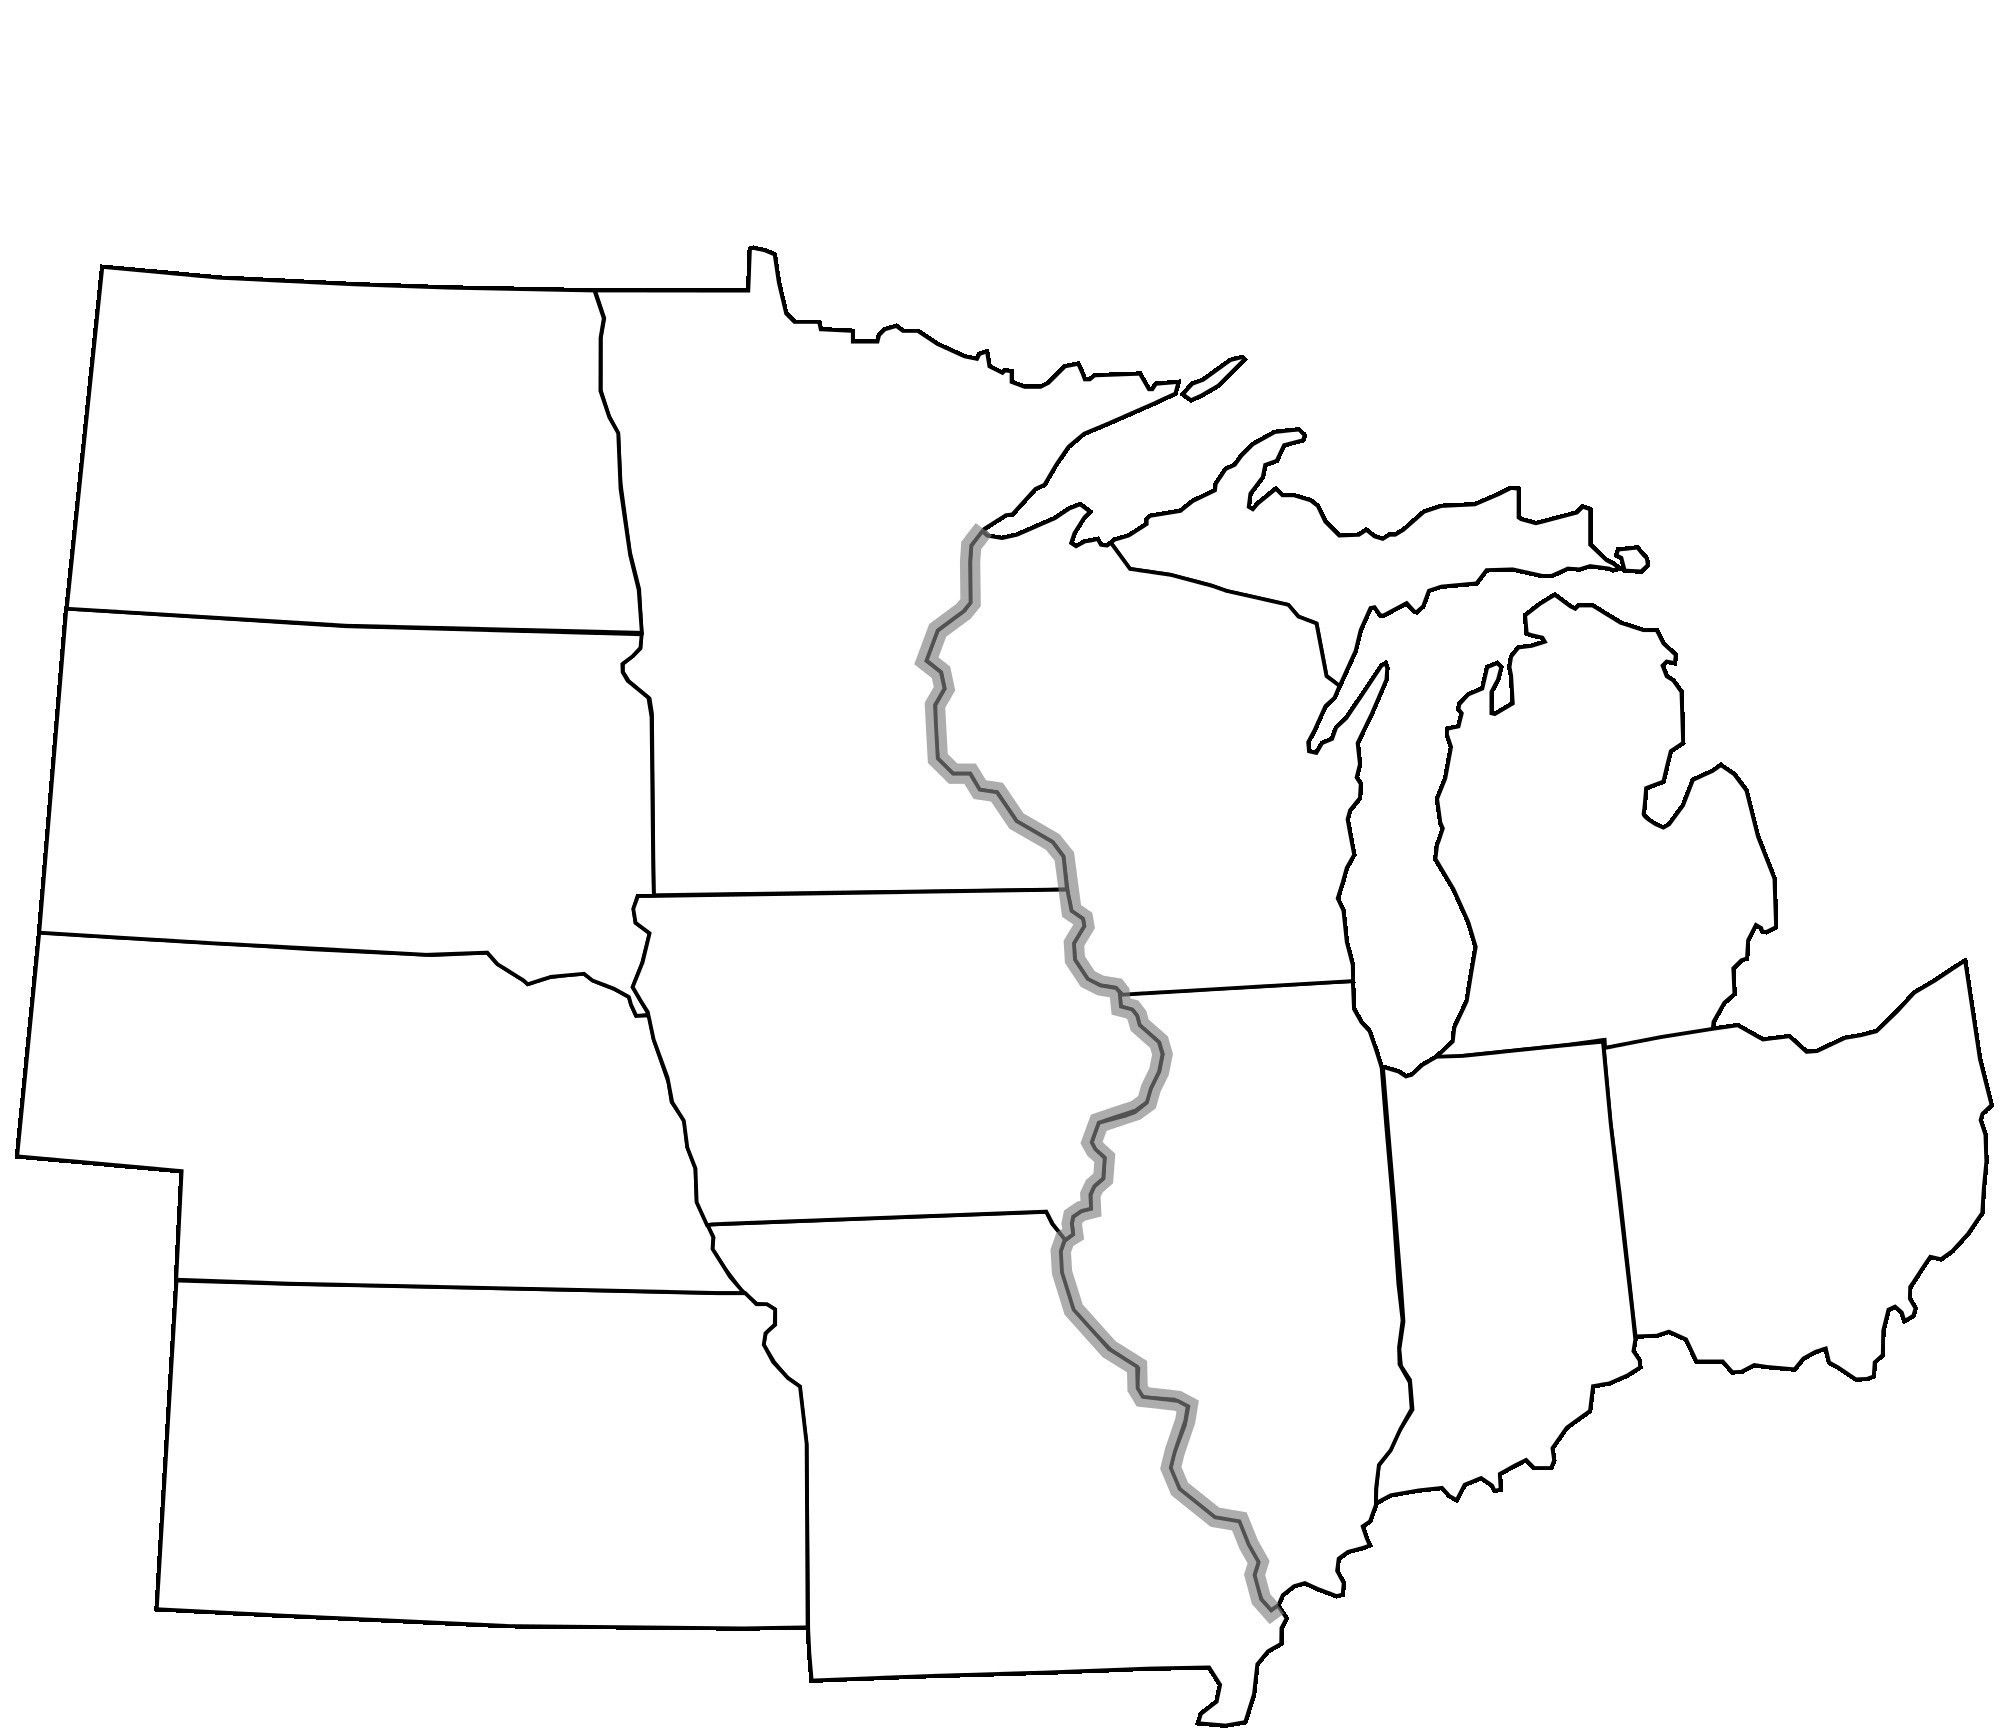 Us Midwest Region Map Blank Us Midwest Region Map Blank Pc79nykc9 New